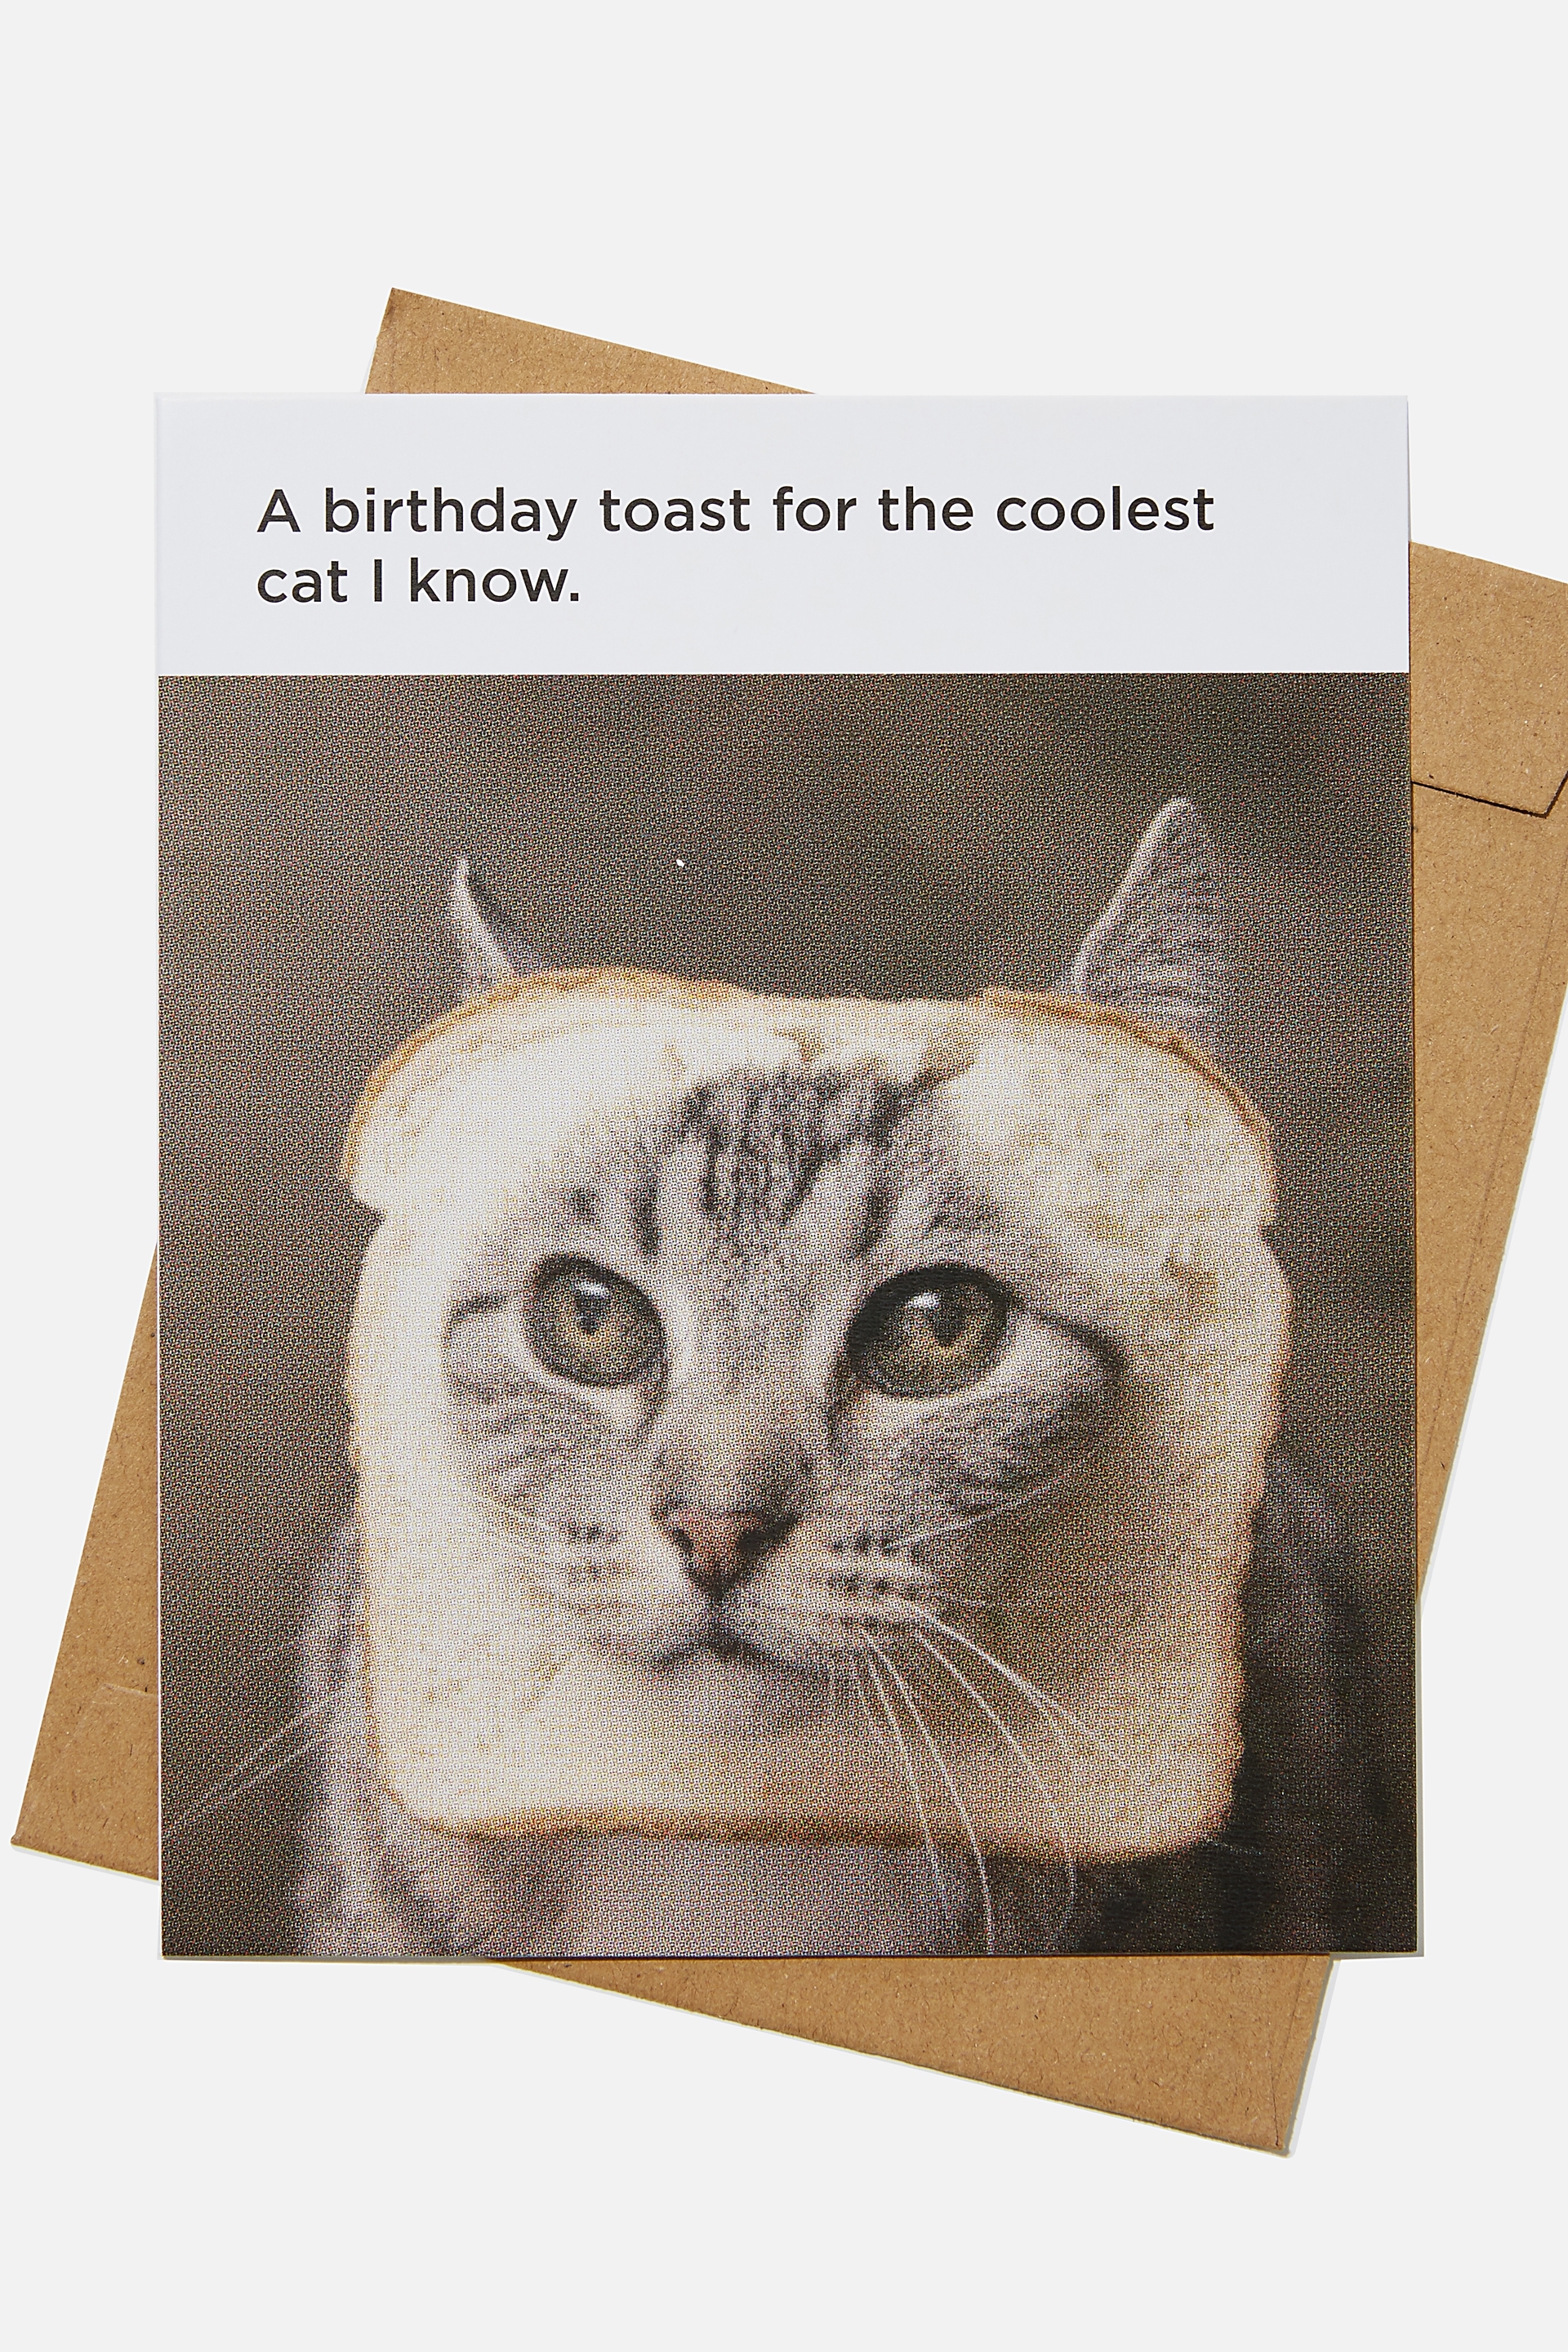 Typo - Funny Birthday Card - Coolest cat birthday toast meme